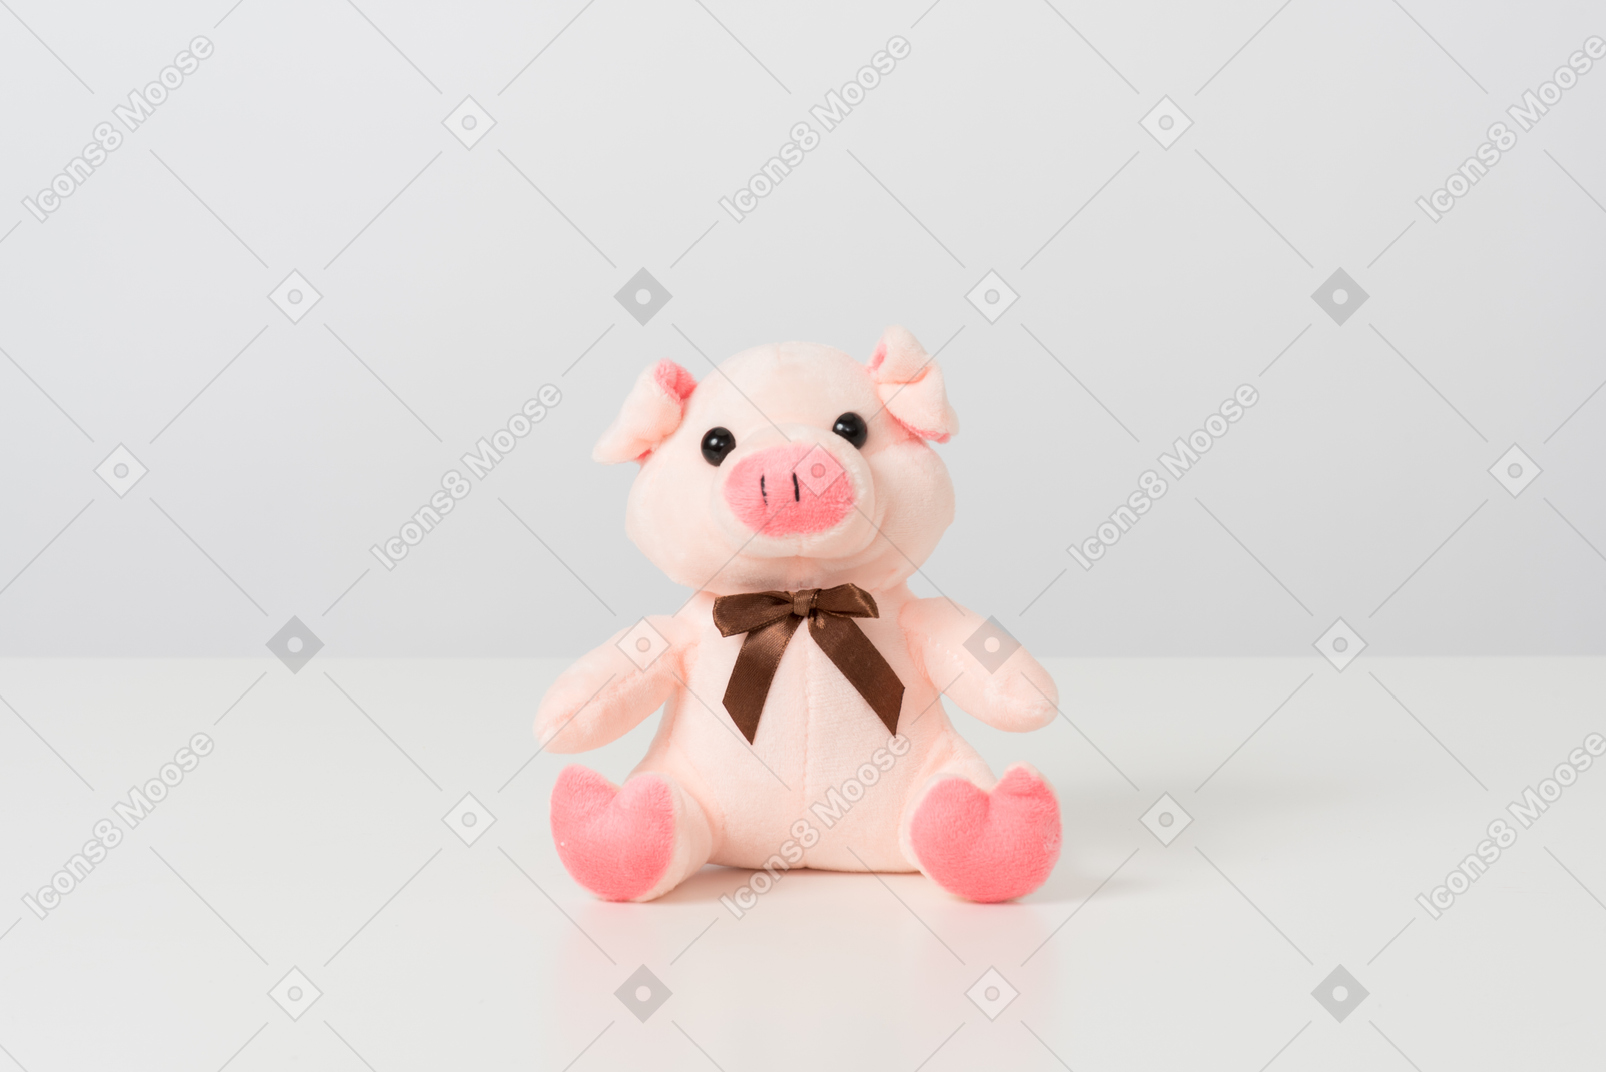 Pig toy